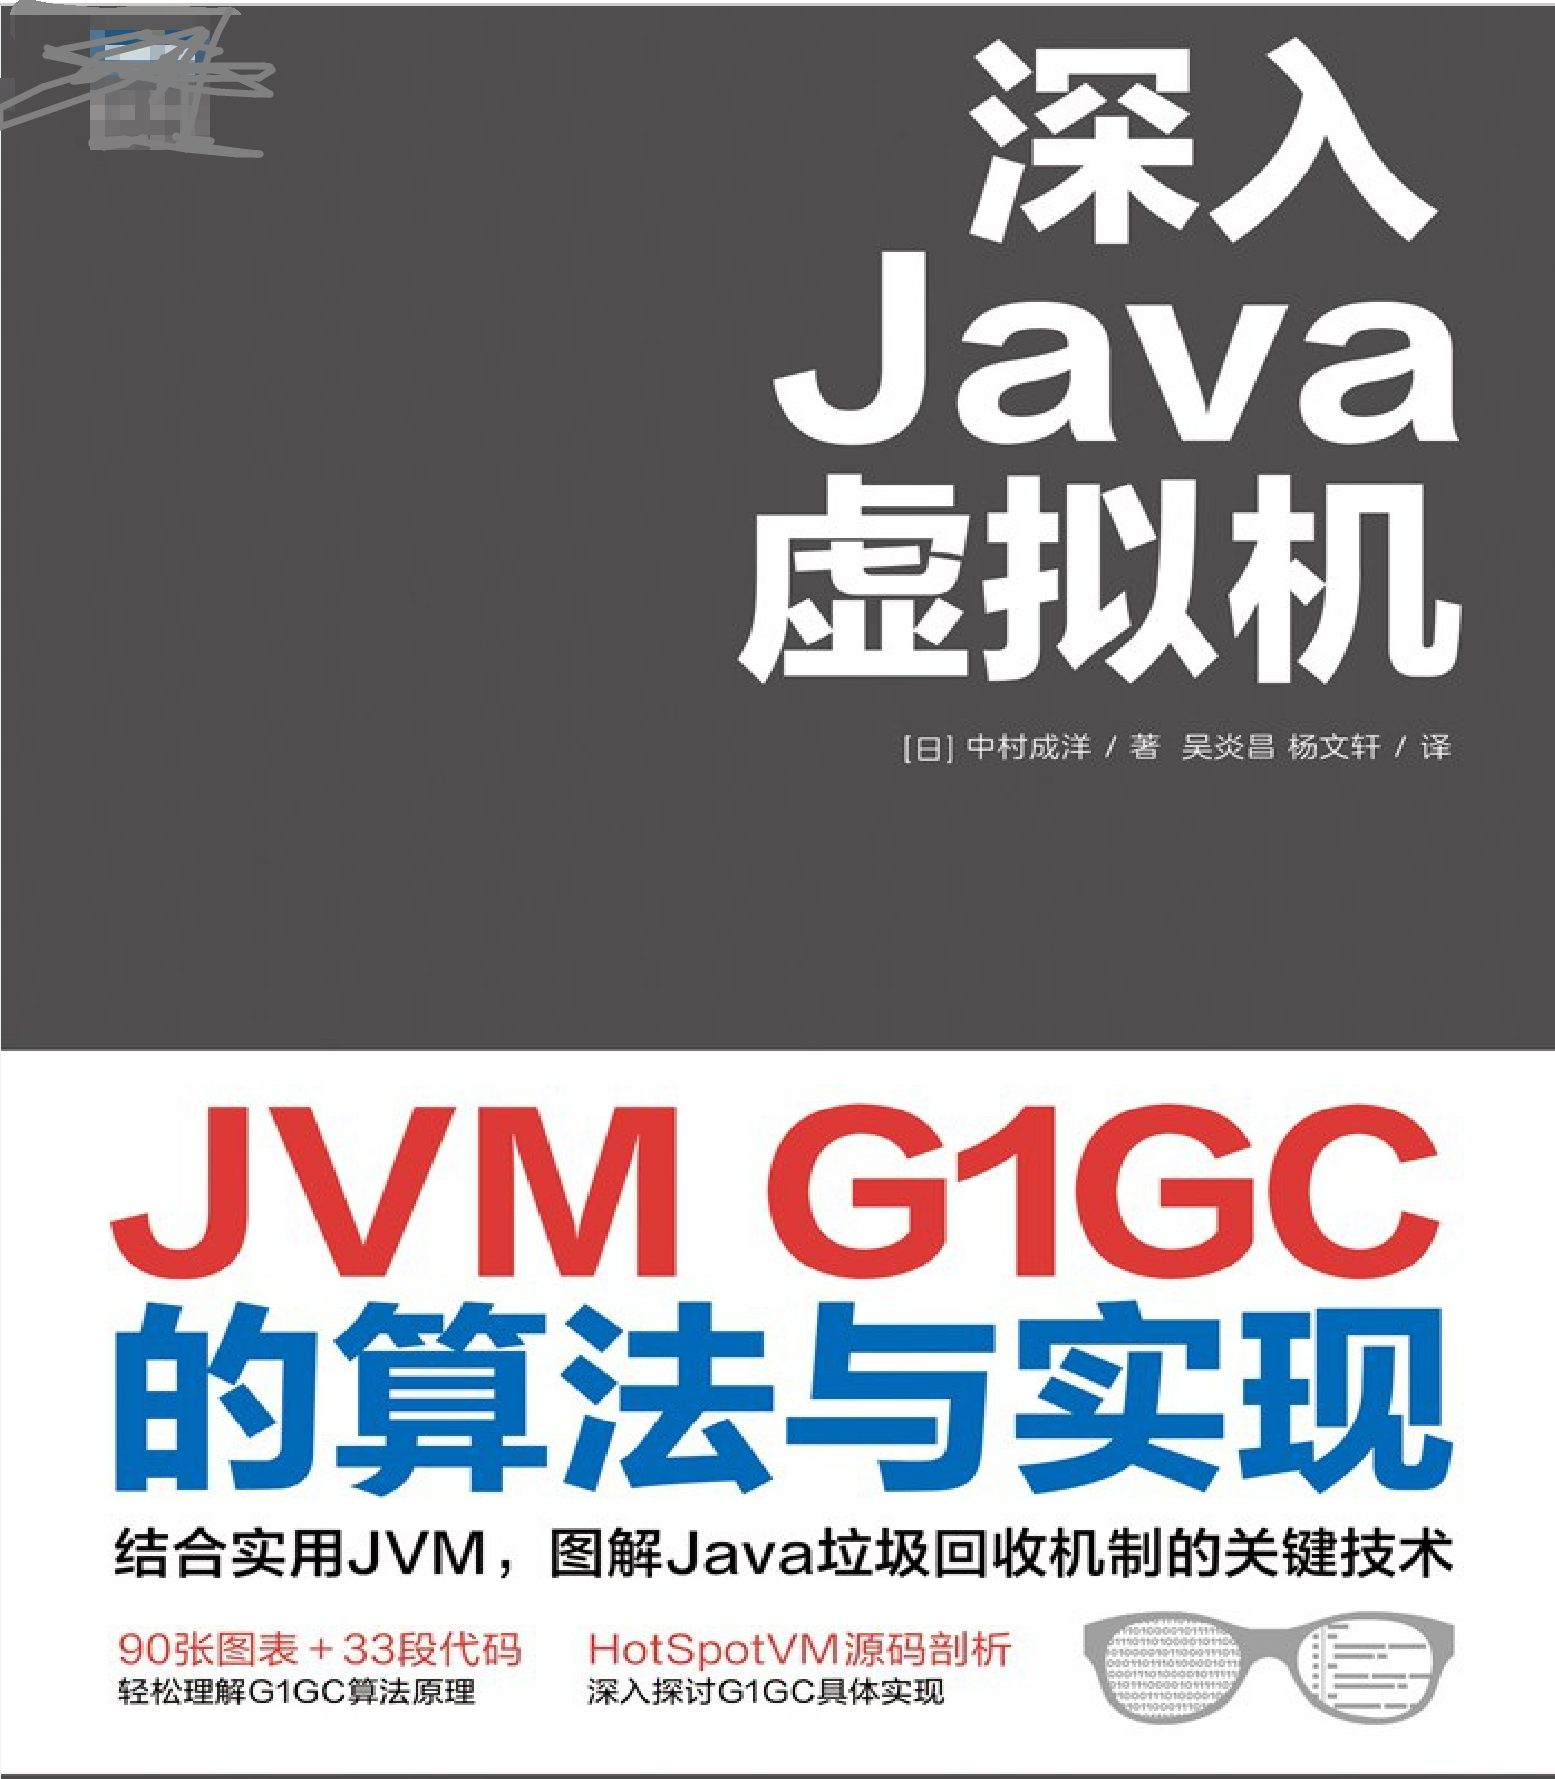 GitHub驚現！全網首份開源的深入理解JVMG1GC的演算法與實現手冊